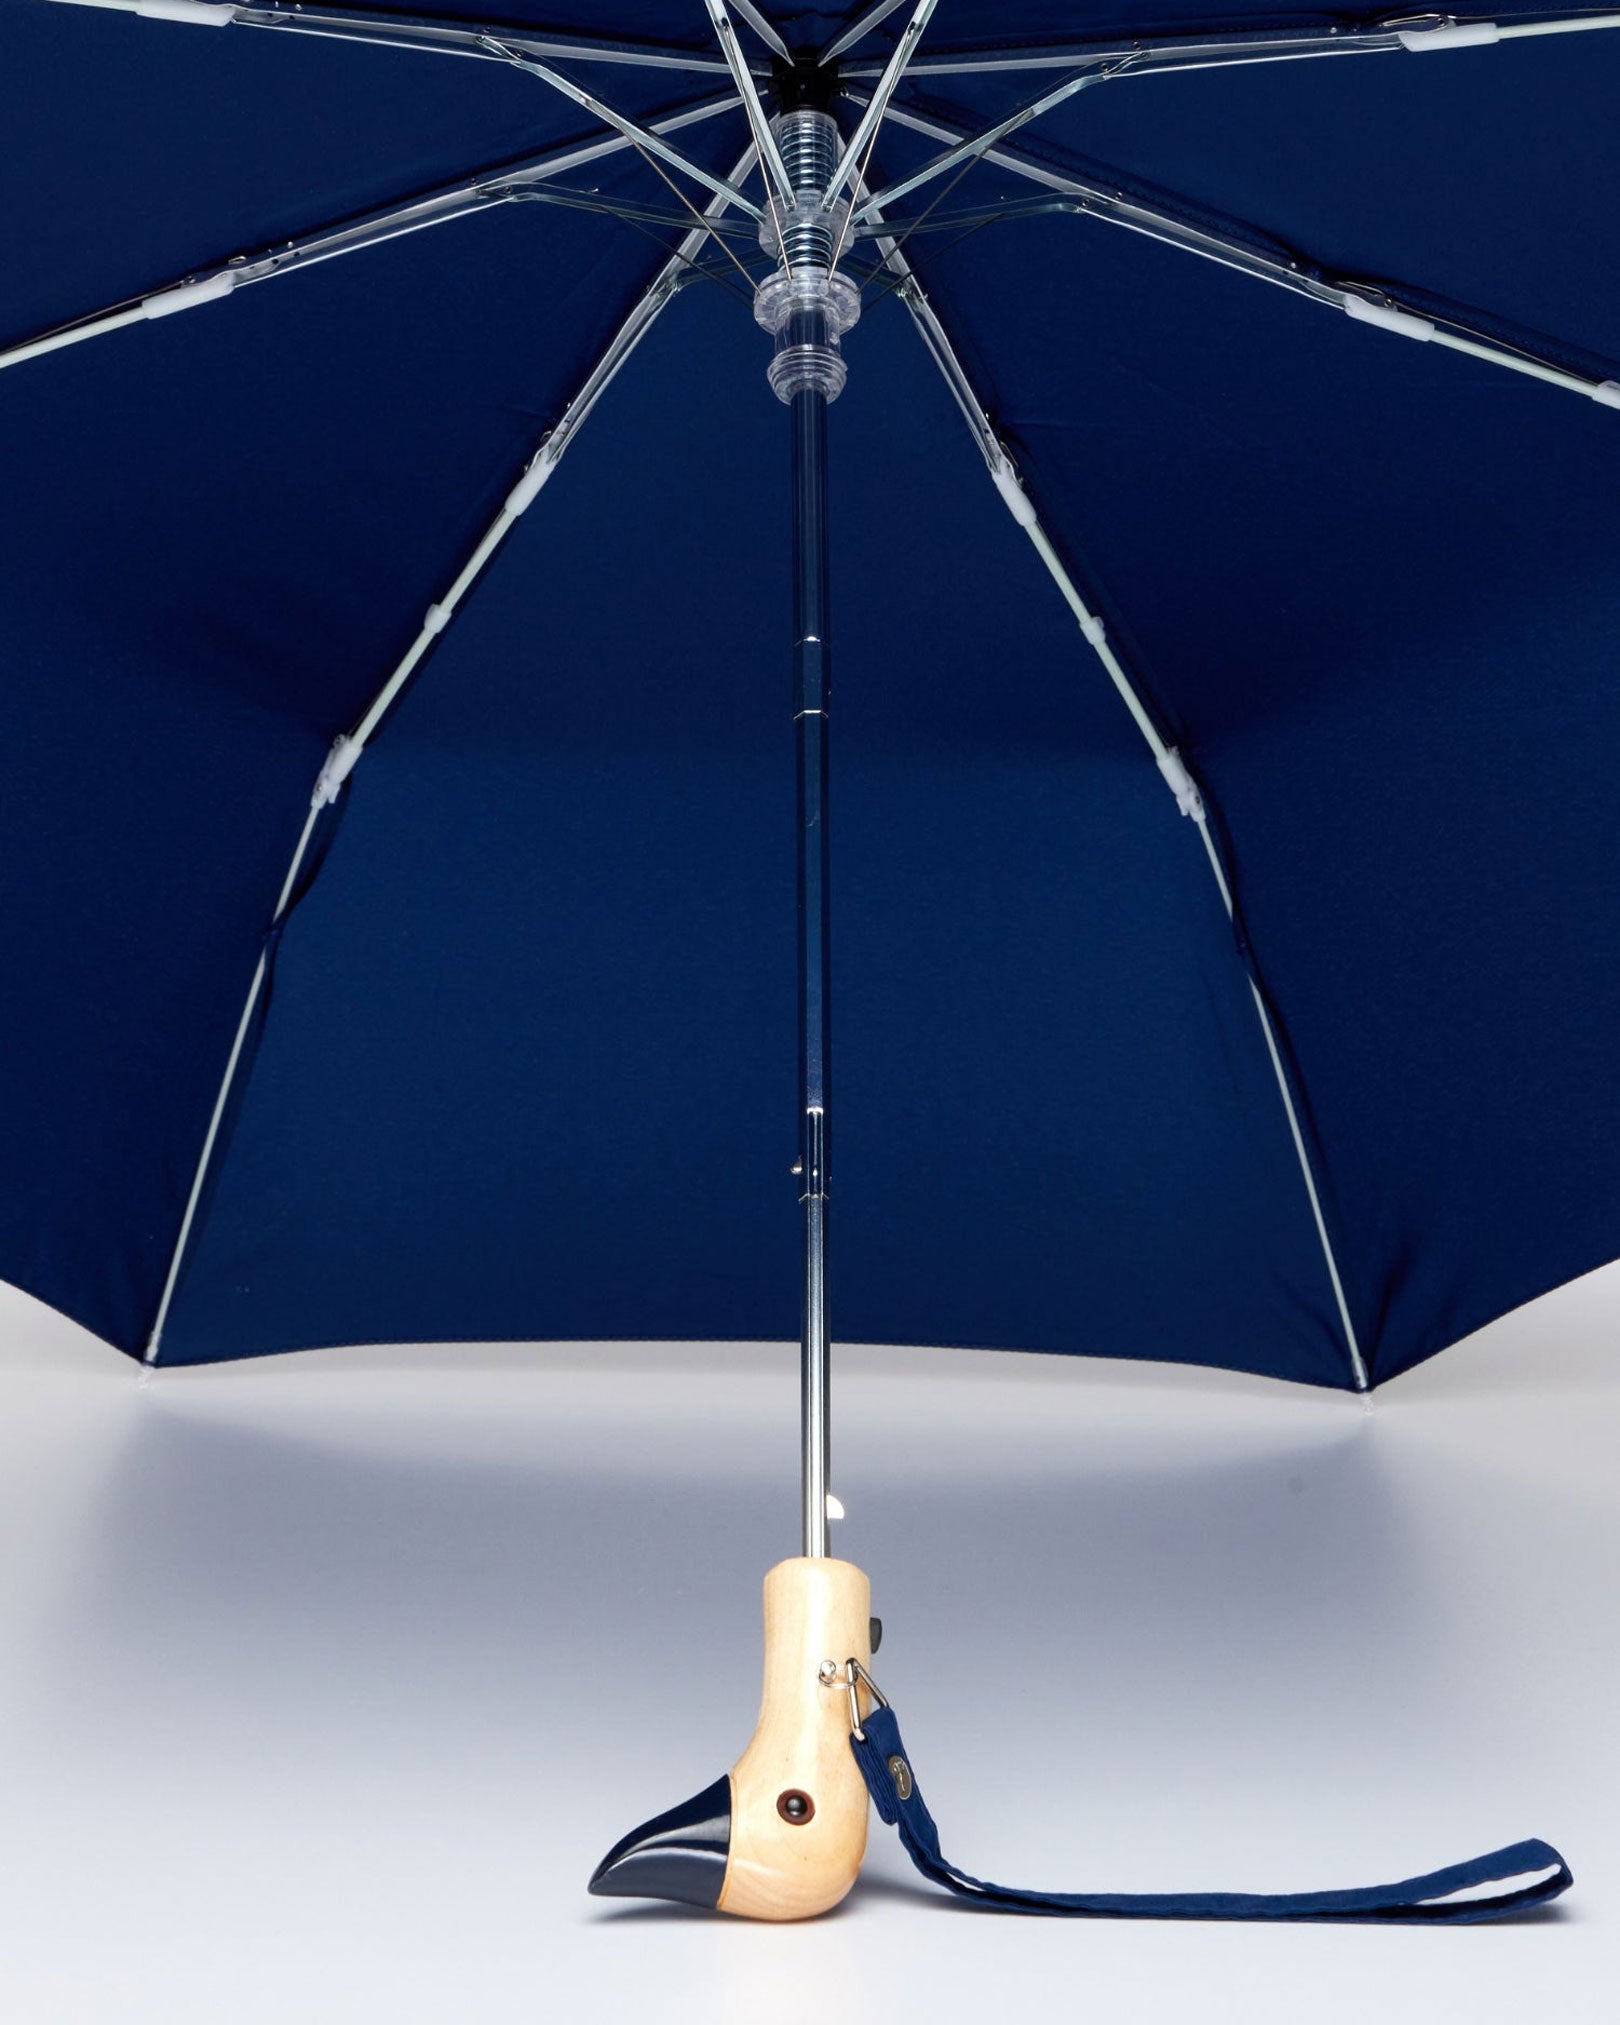 ORIGINAL DUCKHEAD Compact Umbrella in Navy available at Lahn.shop